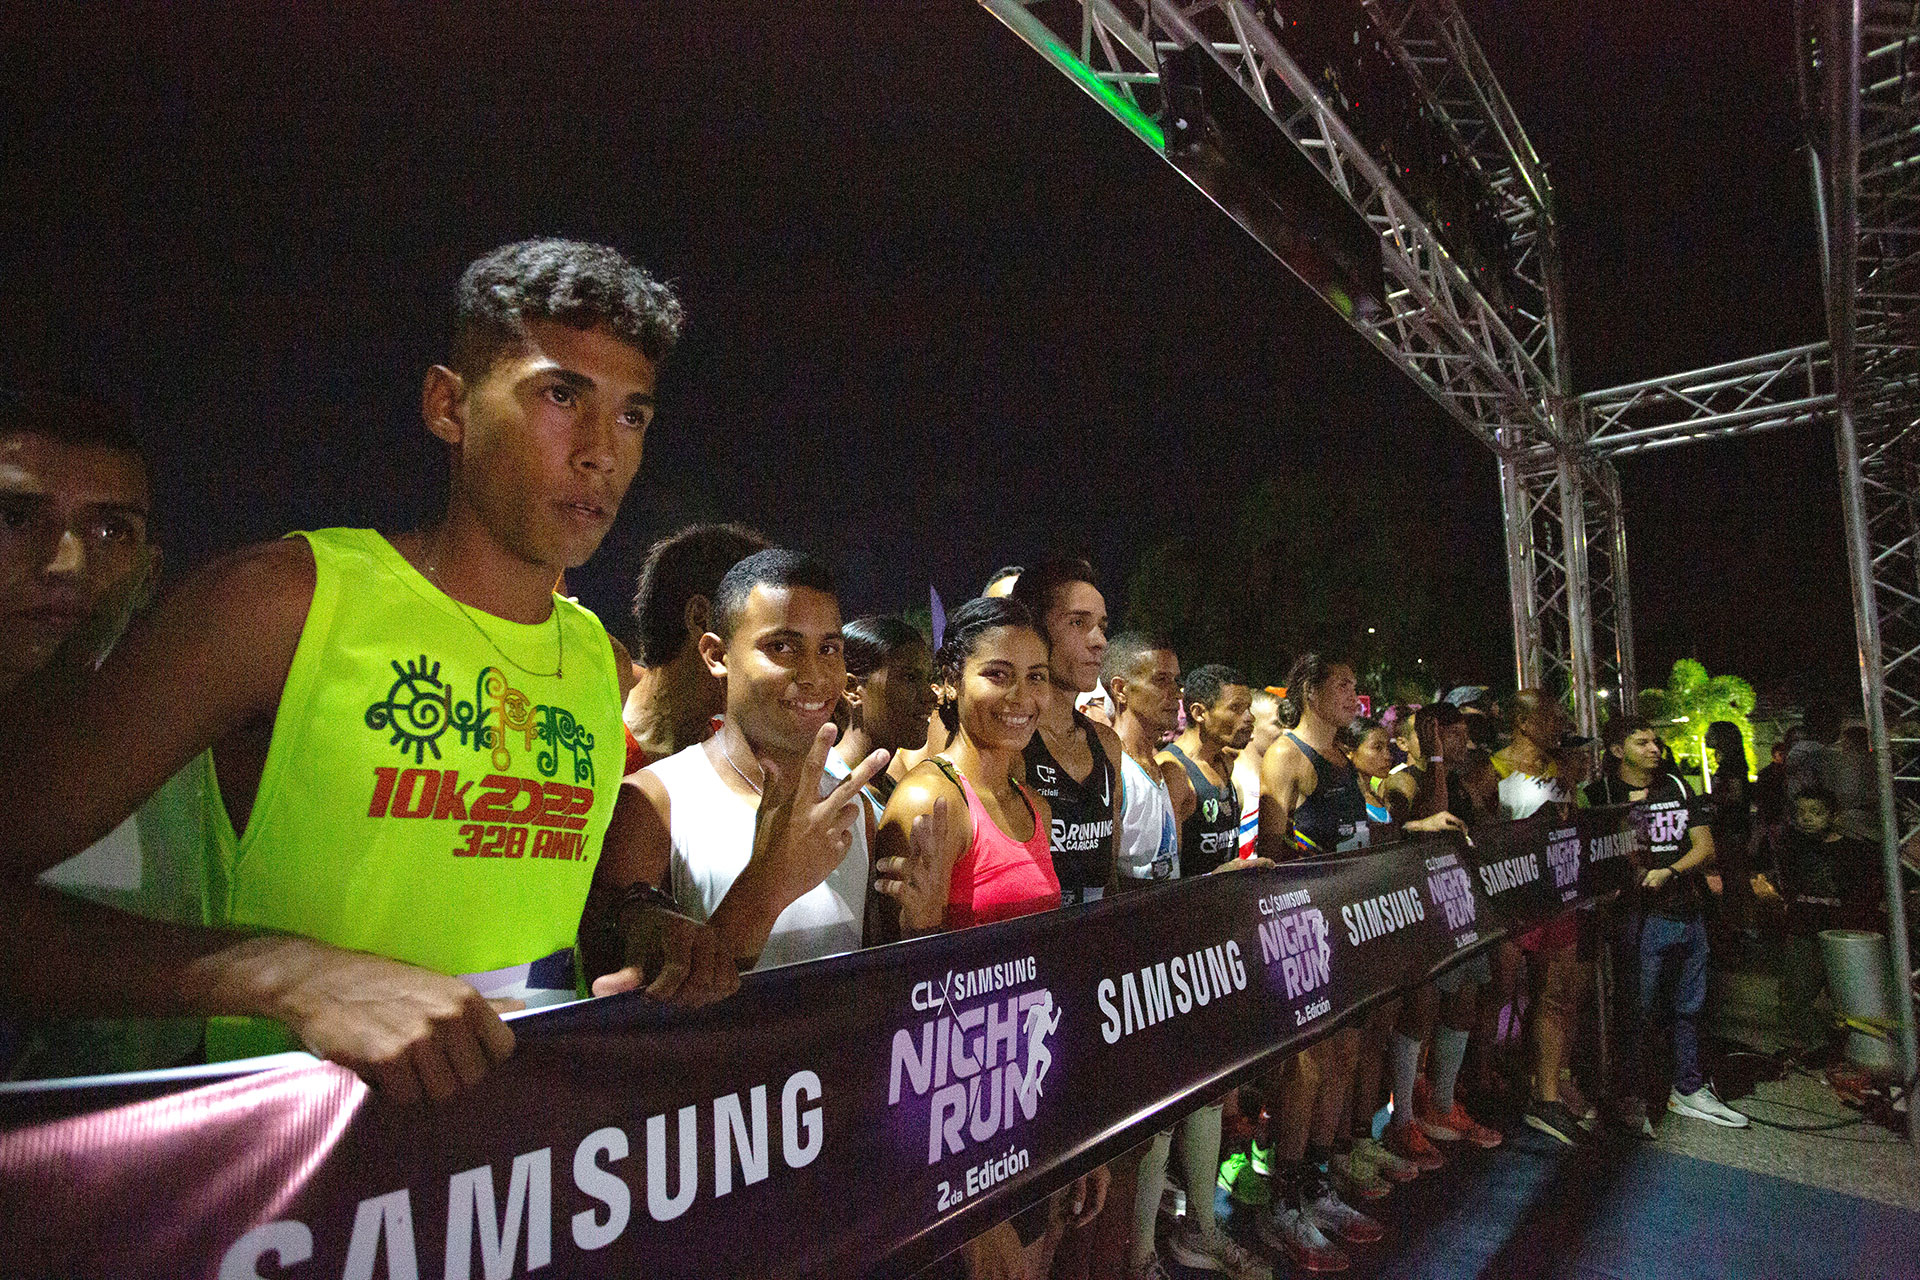 Samsung CLX Night Run